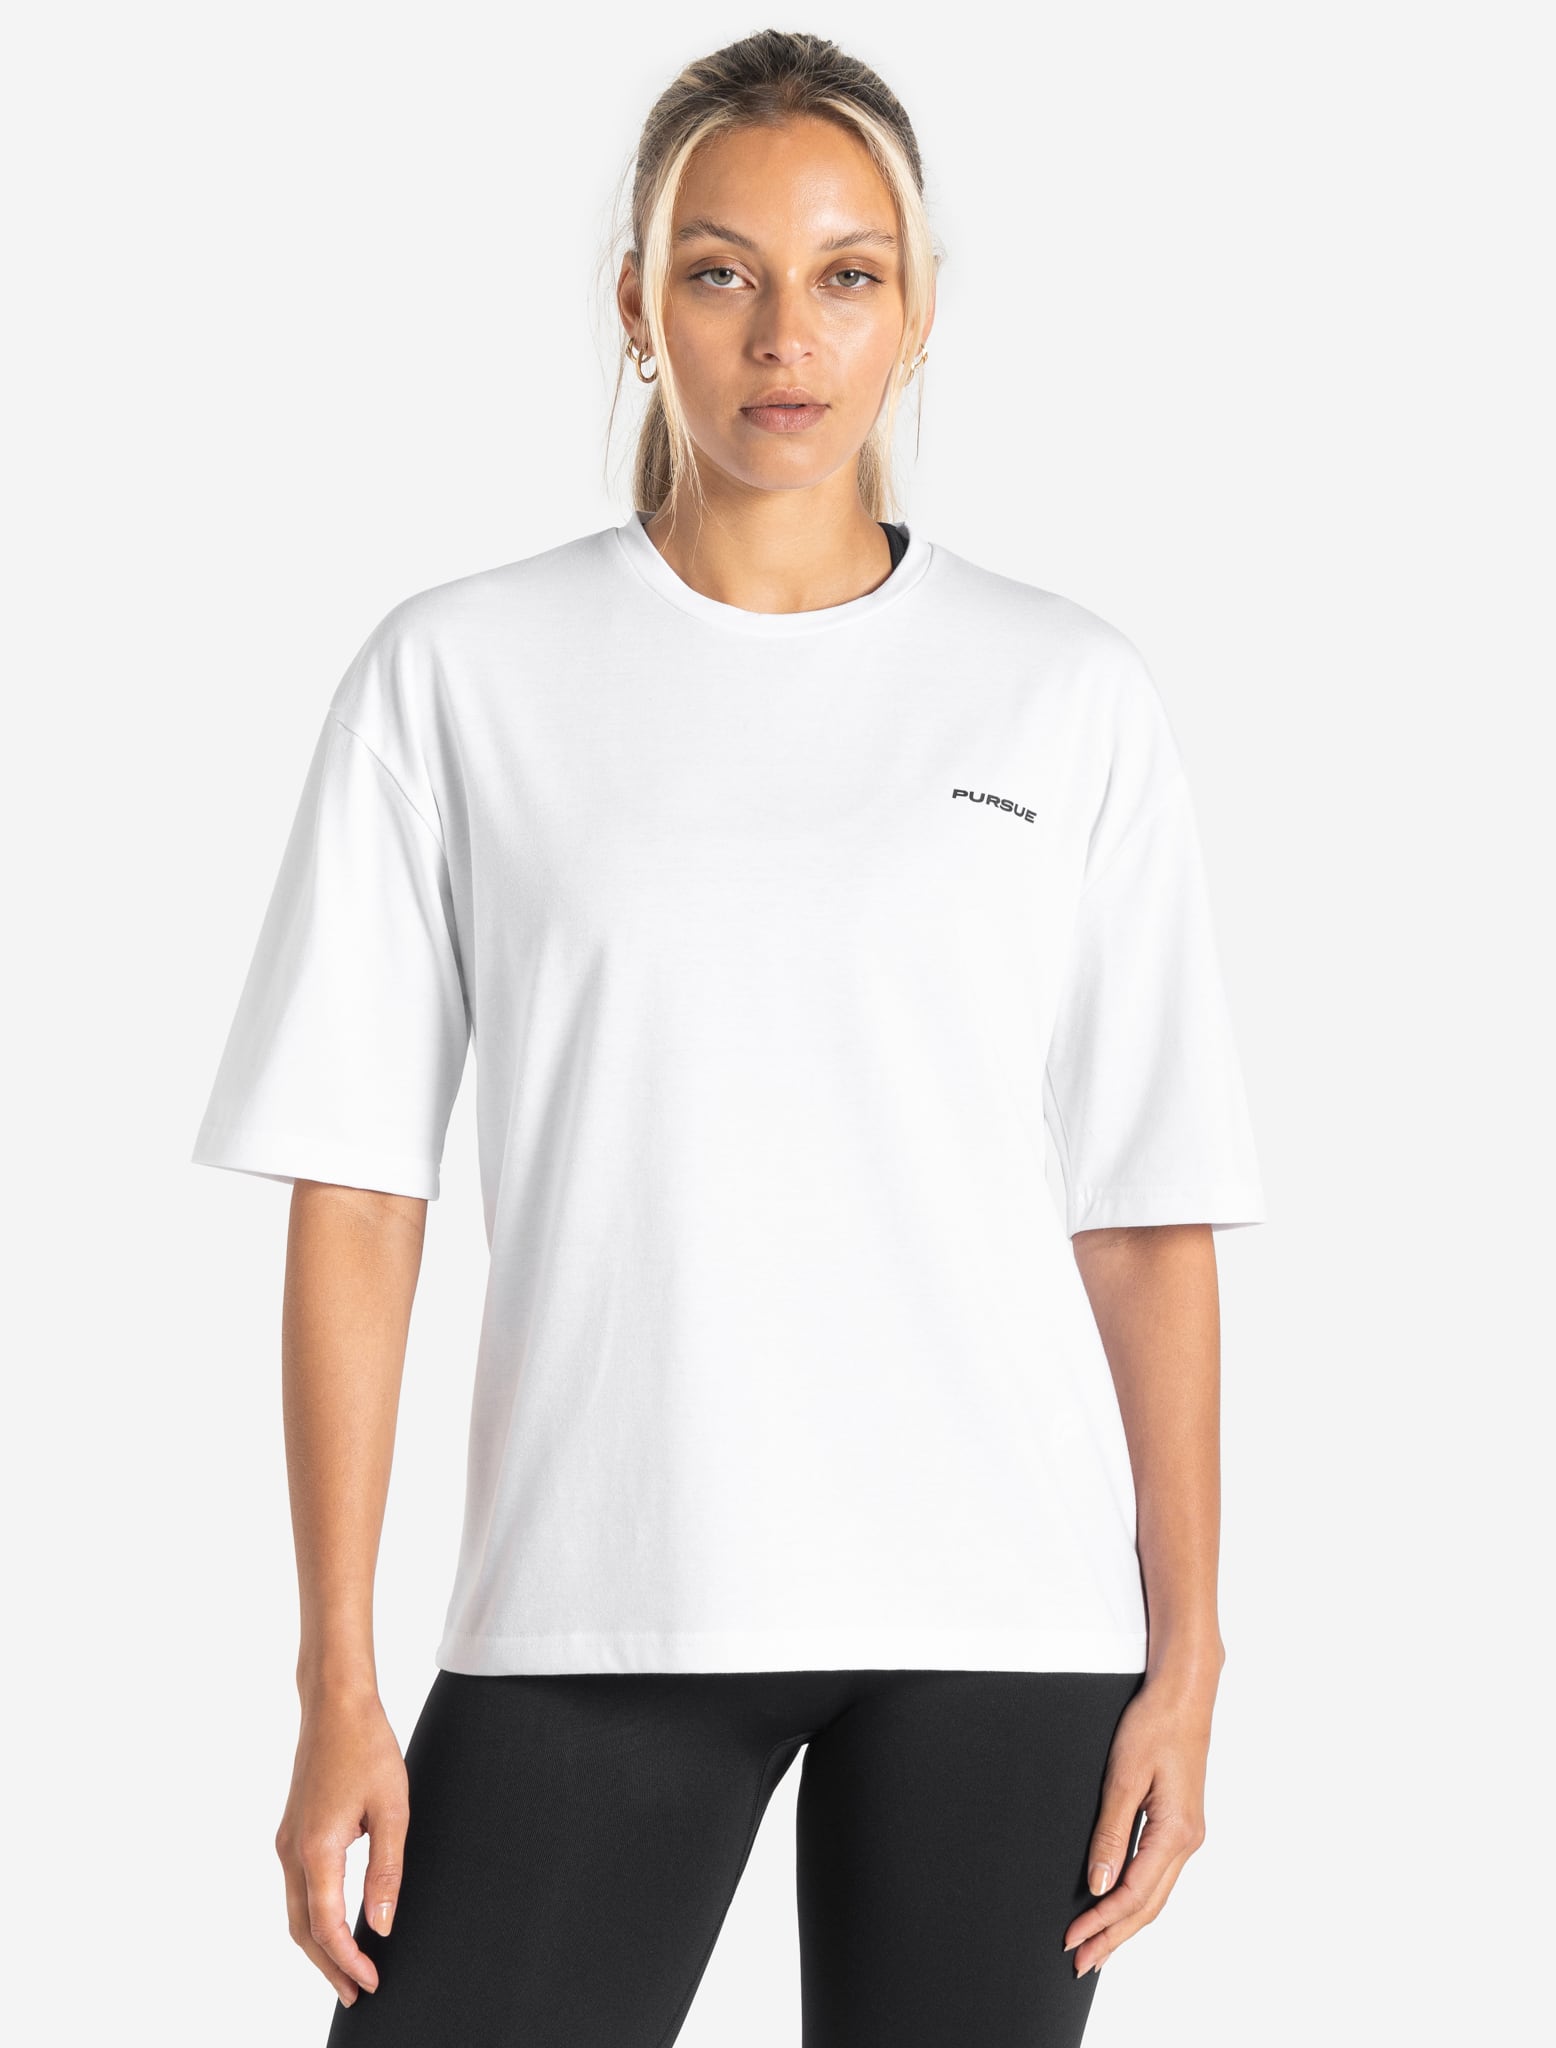 Oversized T-Shirt / White Pursue Fitness 1